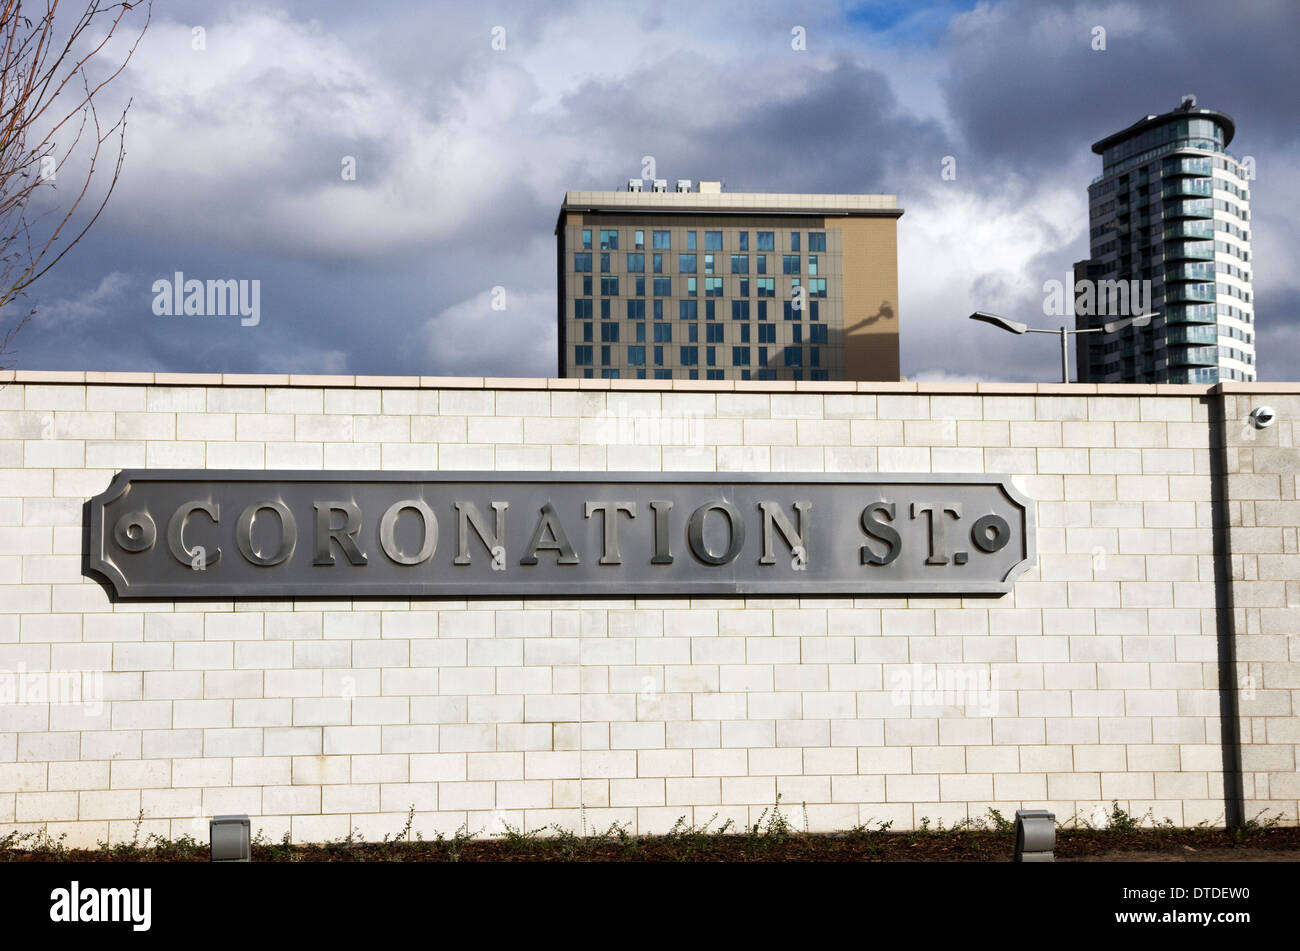 New home for Coronation Street at ITVs Trafford Wharf Studios, Media City, Salford Quays/ Trafford Park, Manchester, England, UK Stock Photo